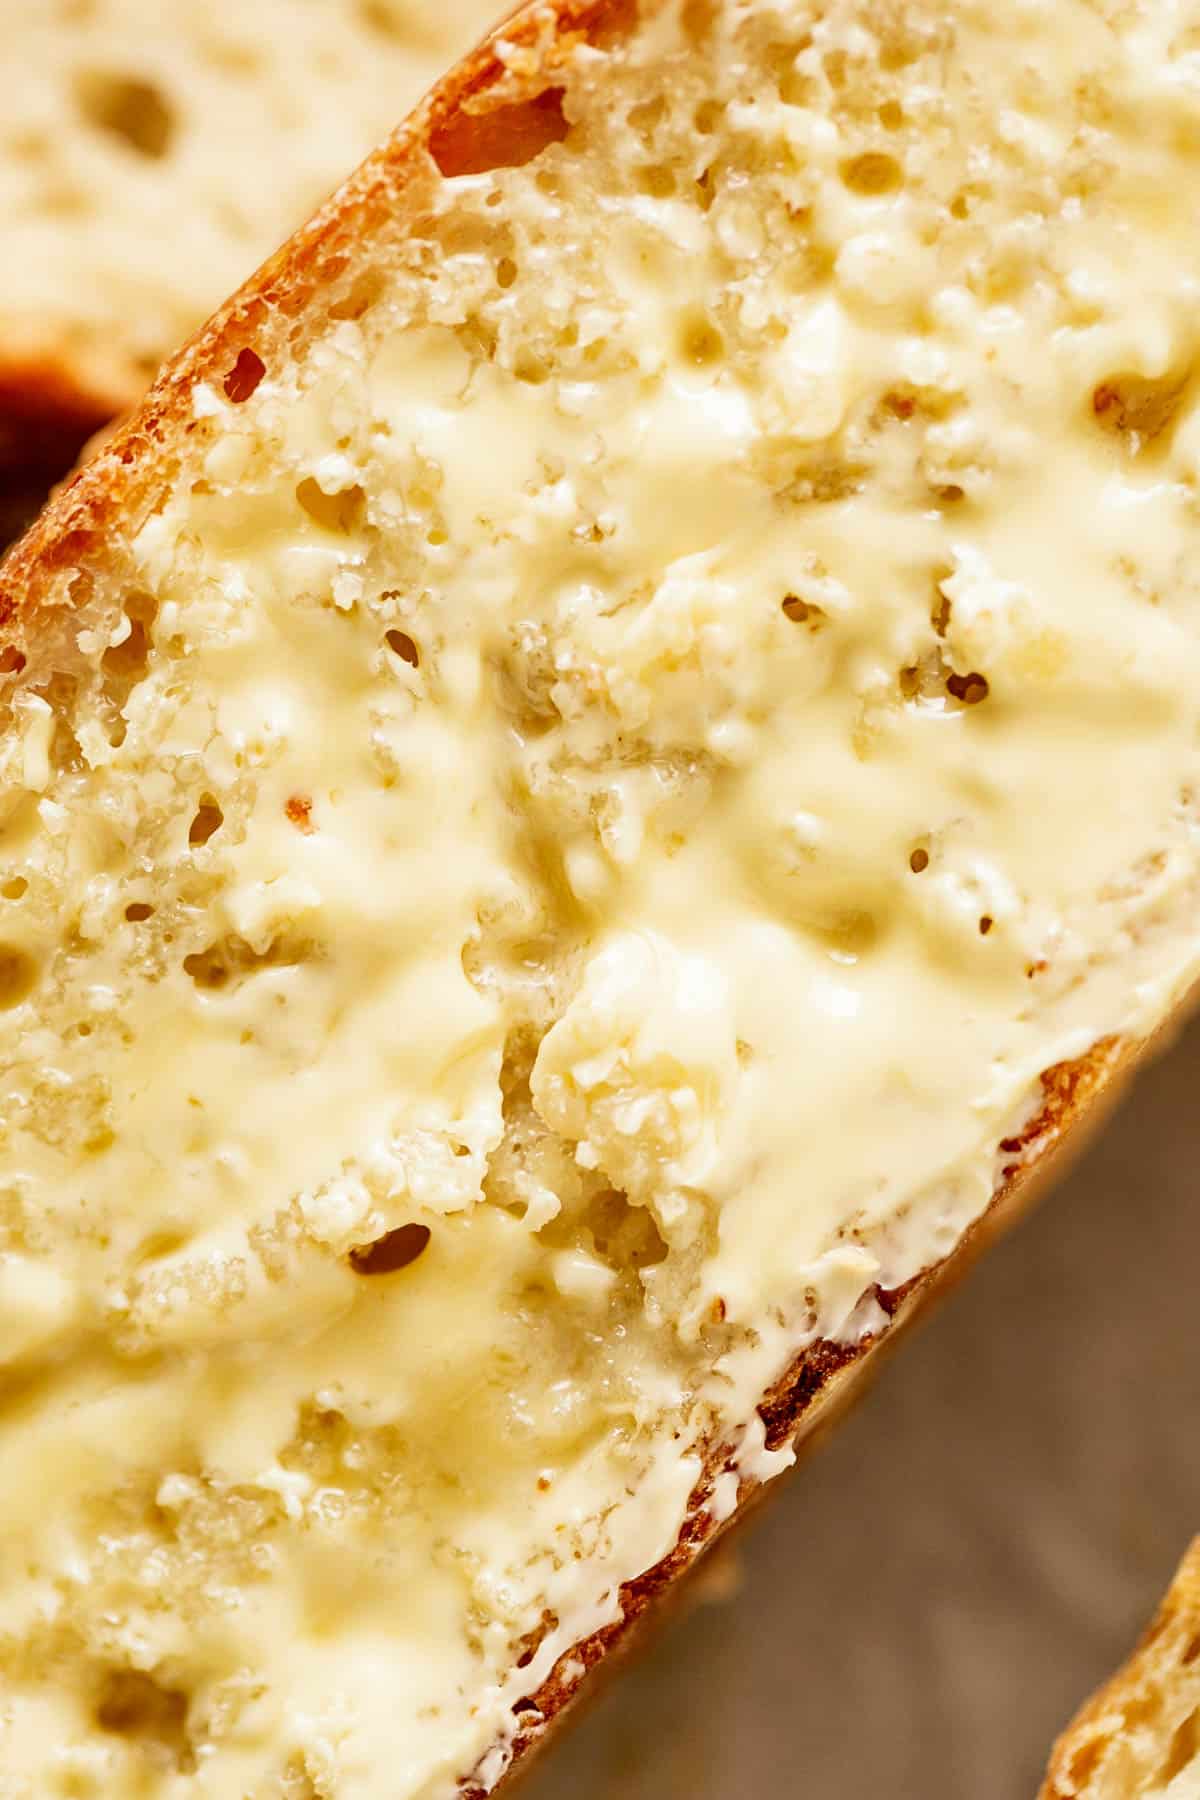 Hot, buttered slice of Artisan bread